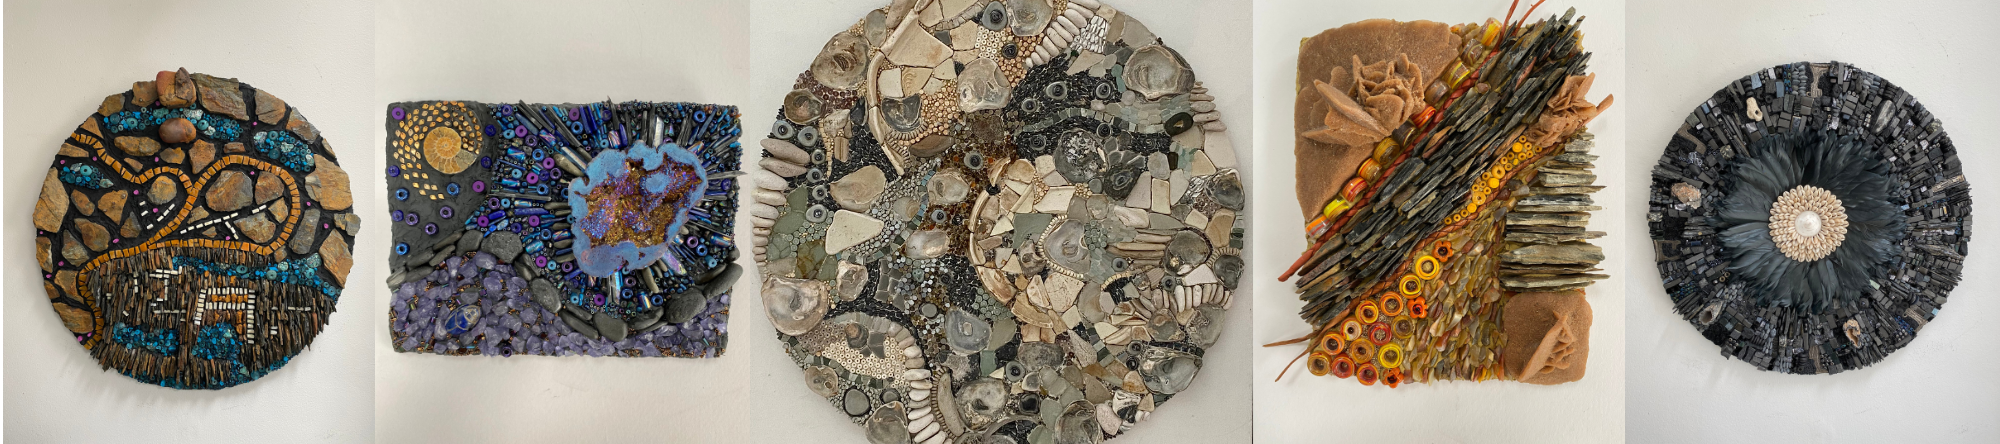 a selection of mosaics by Scilla Alvarado